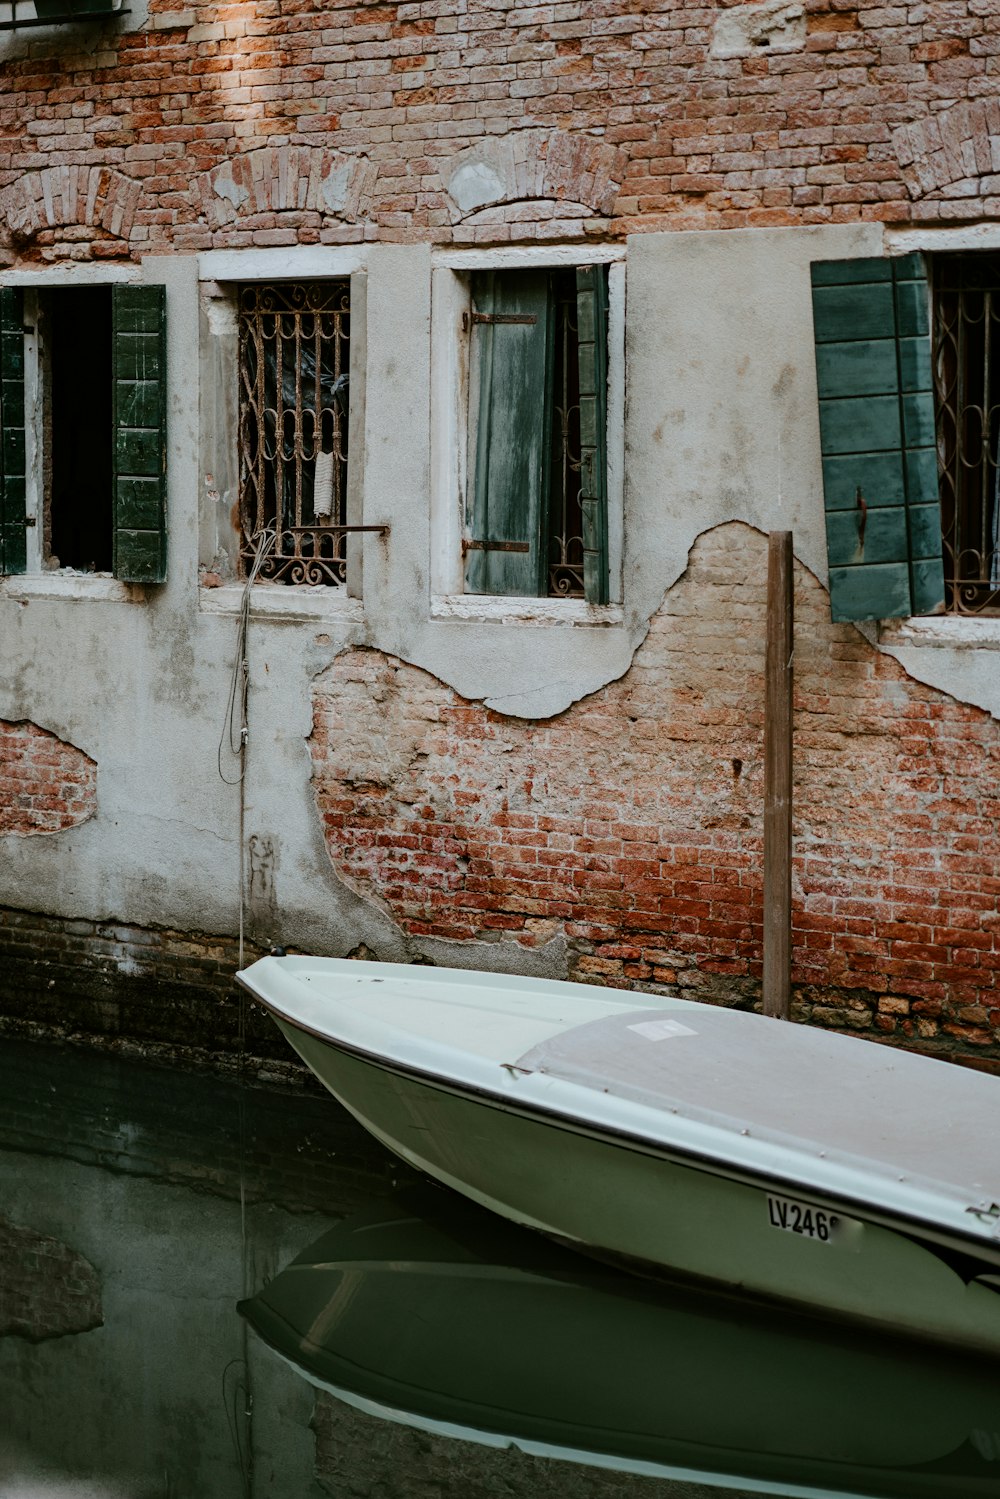 white boat next to brick wall